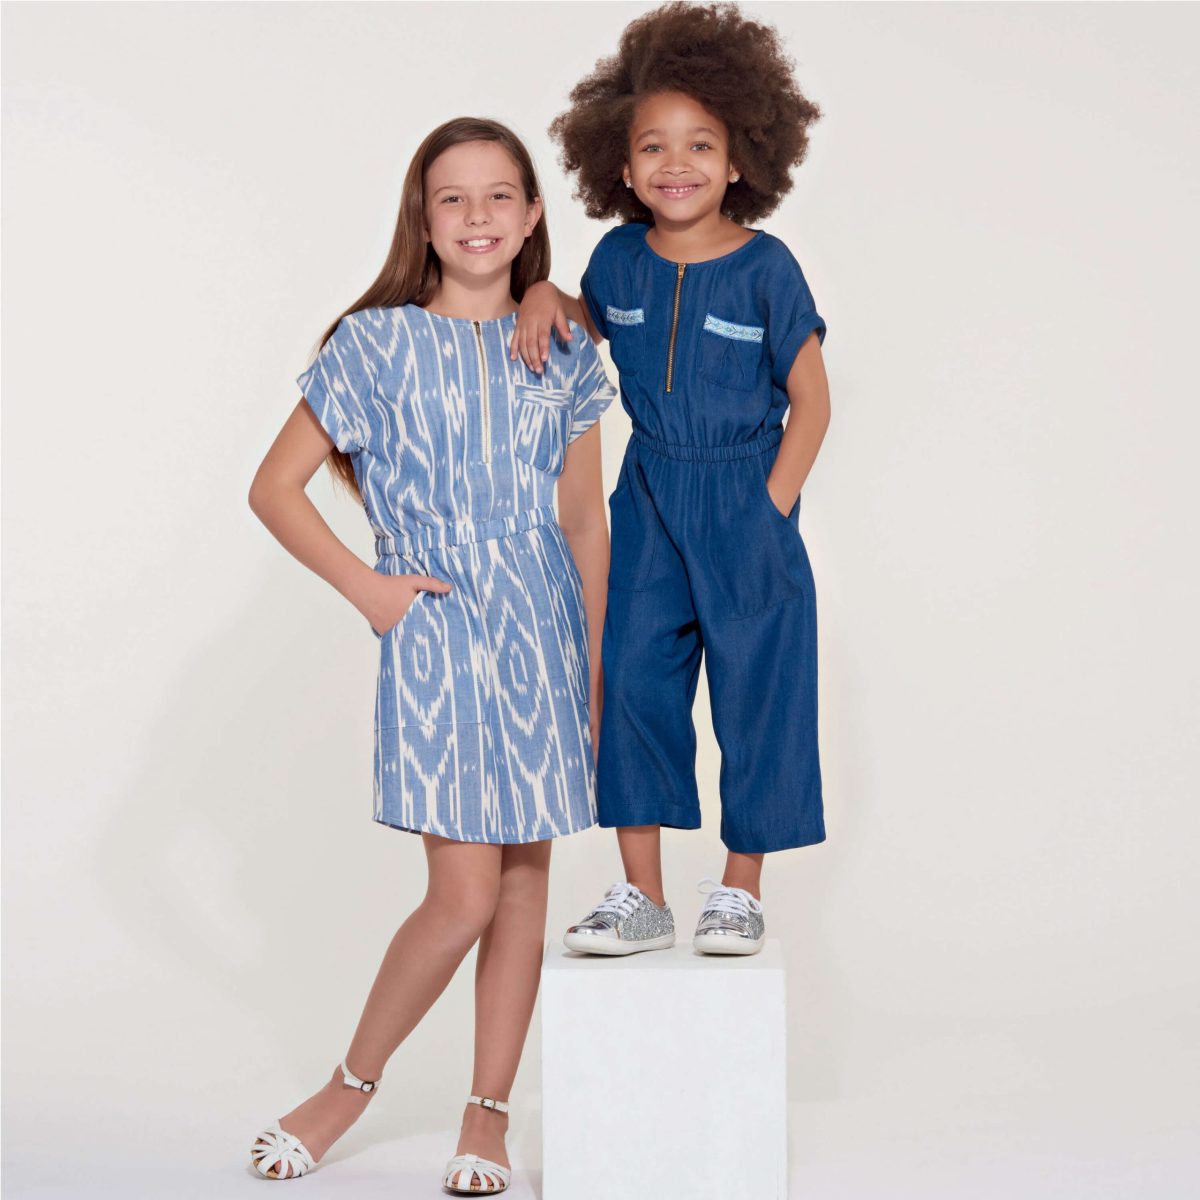 New Look Pattern N6612 Children's, Girls' Jumpsuit, Romper and Dress